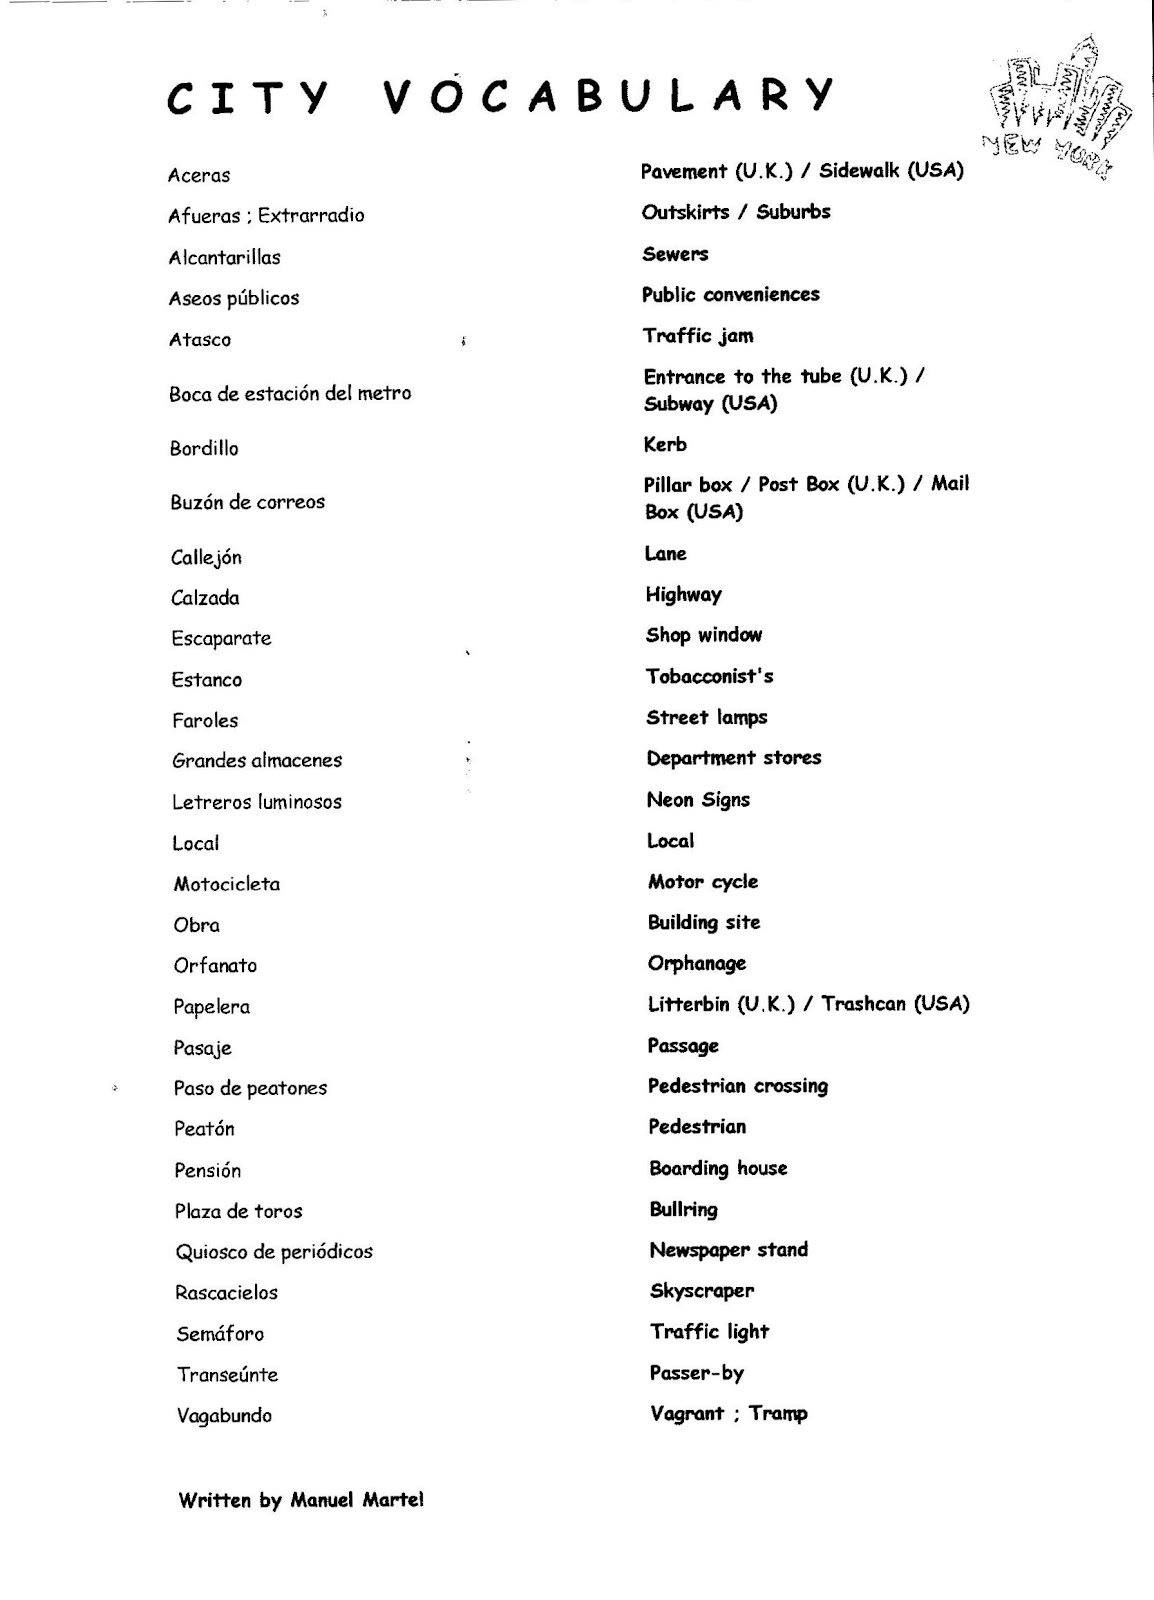 12-best-images-of-basic-spanish-vocabulary-worksheets-spanish-words-and-phrases-worksheet